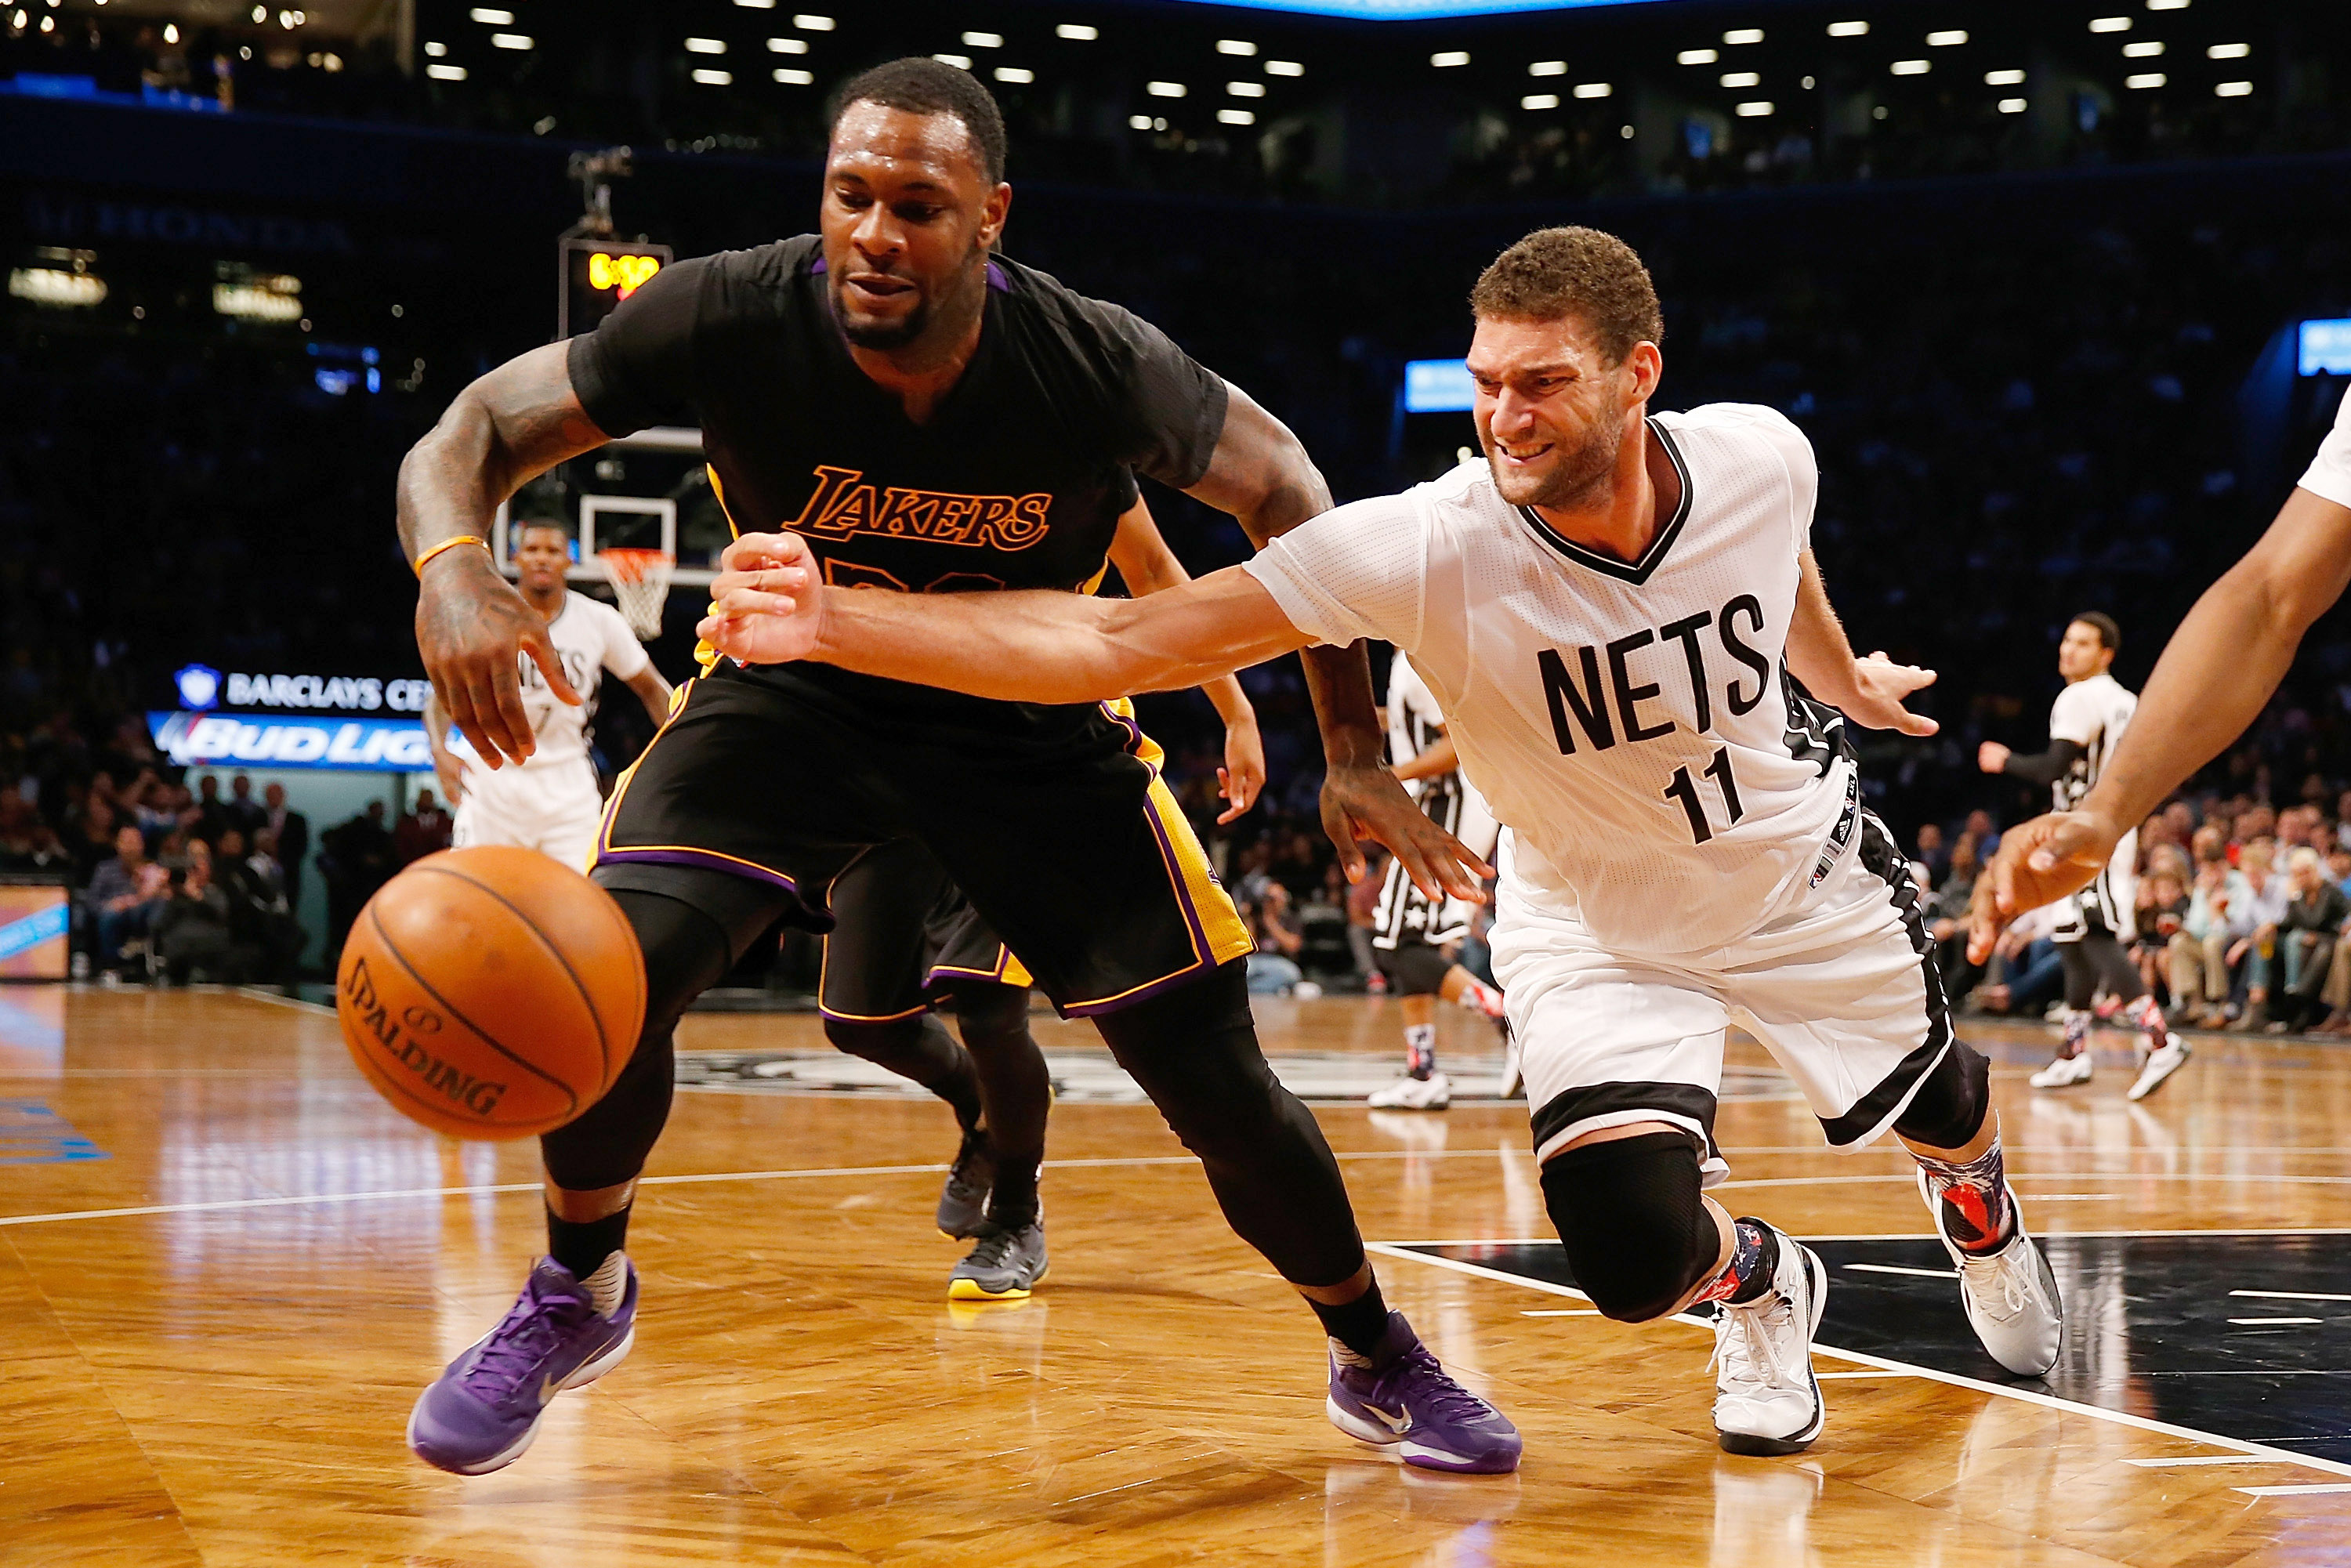 How to Watch Nets vs. Knicks Free Live Stream Online